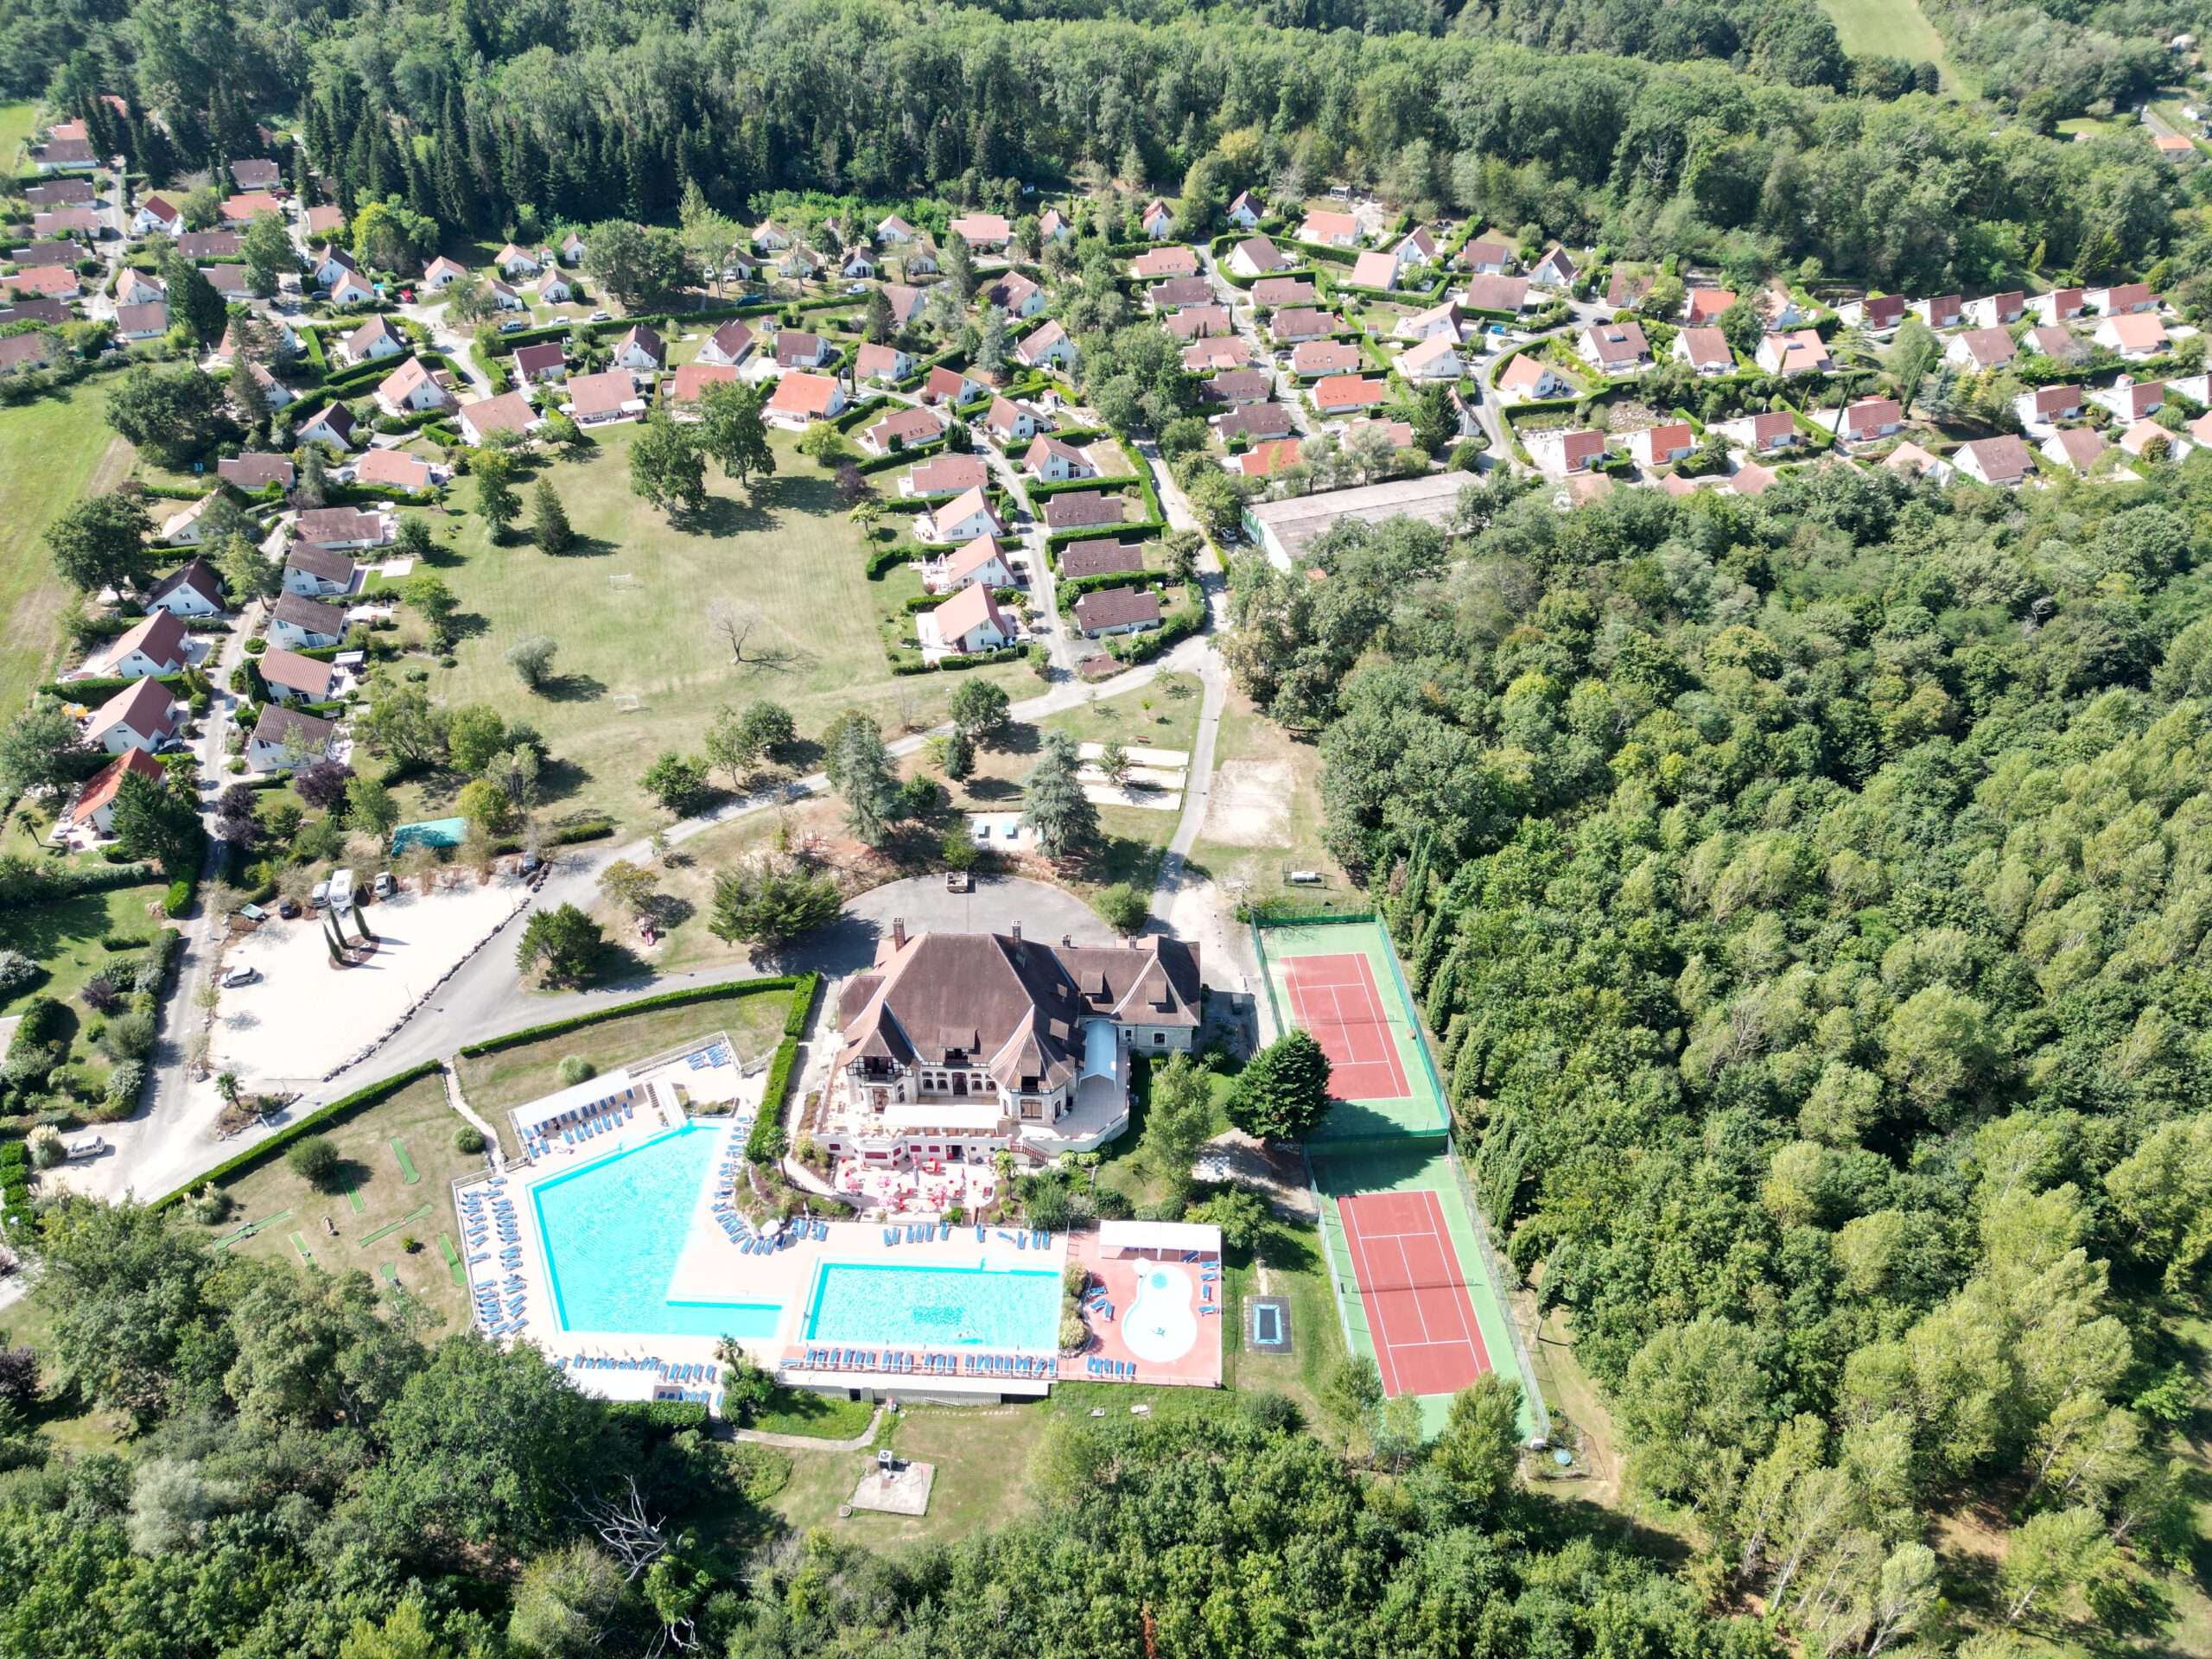 Vakantiepark Chateau Cazaleres